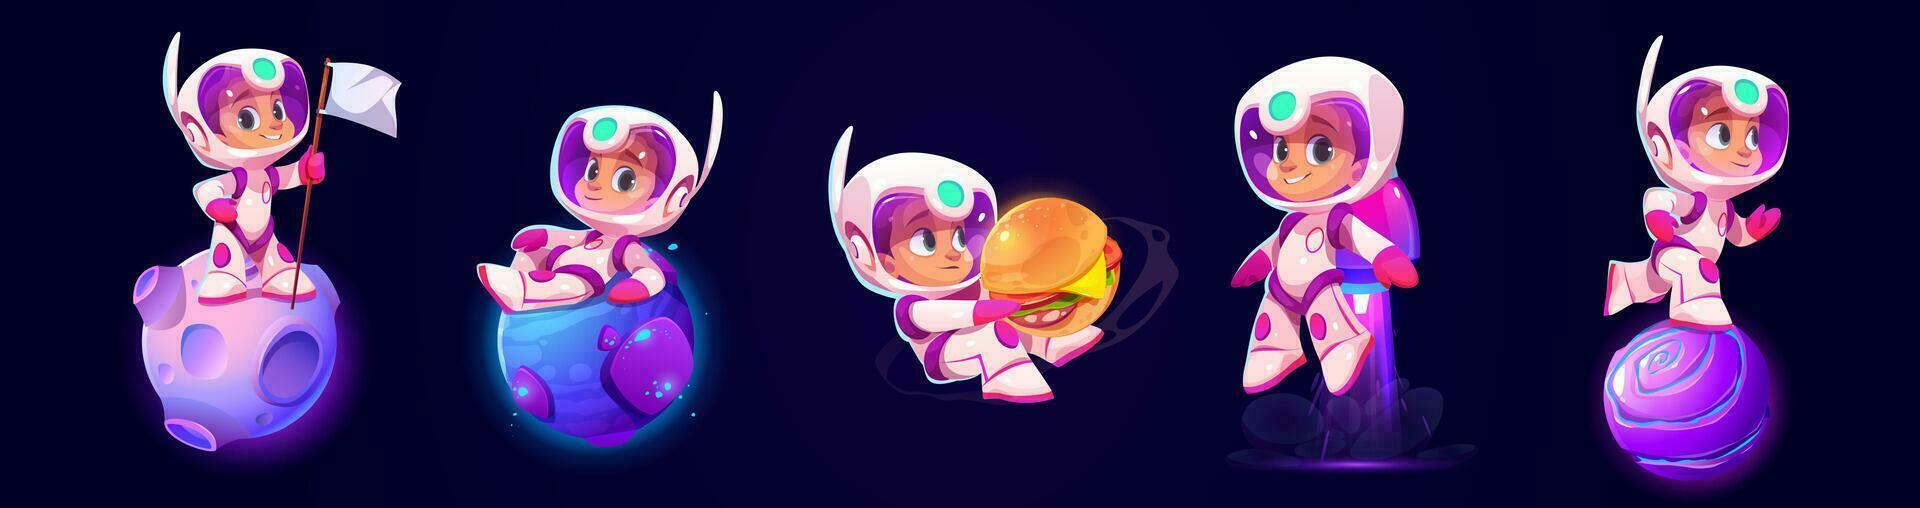 Kid astronaut spaceman cute cartoon character vector